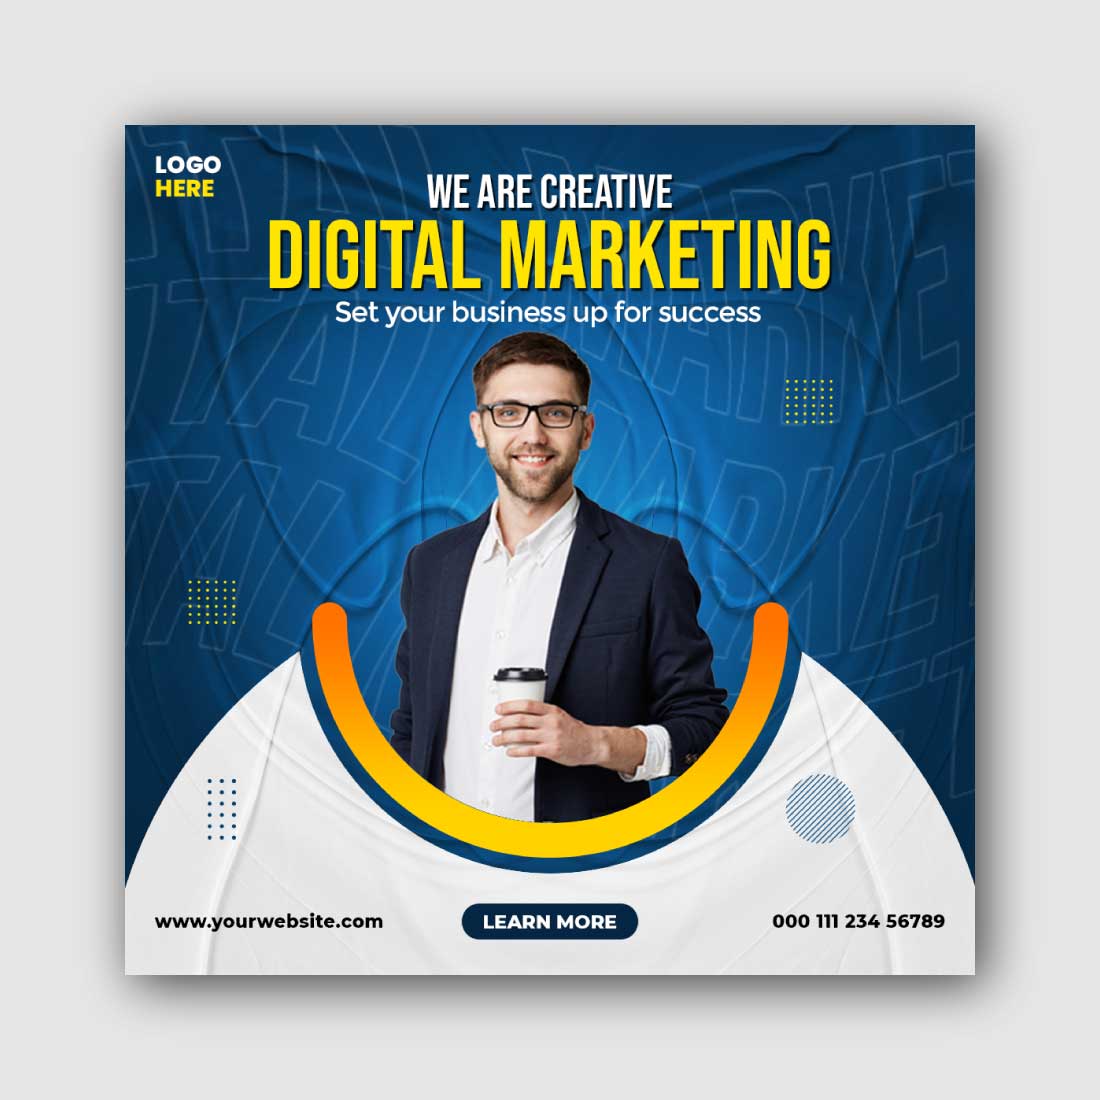 Digital marketing agency Social Media Template cover image.